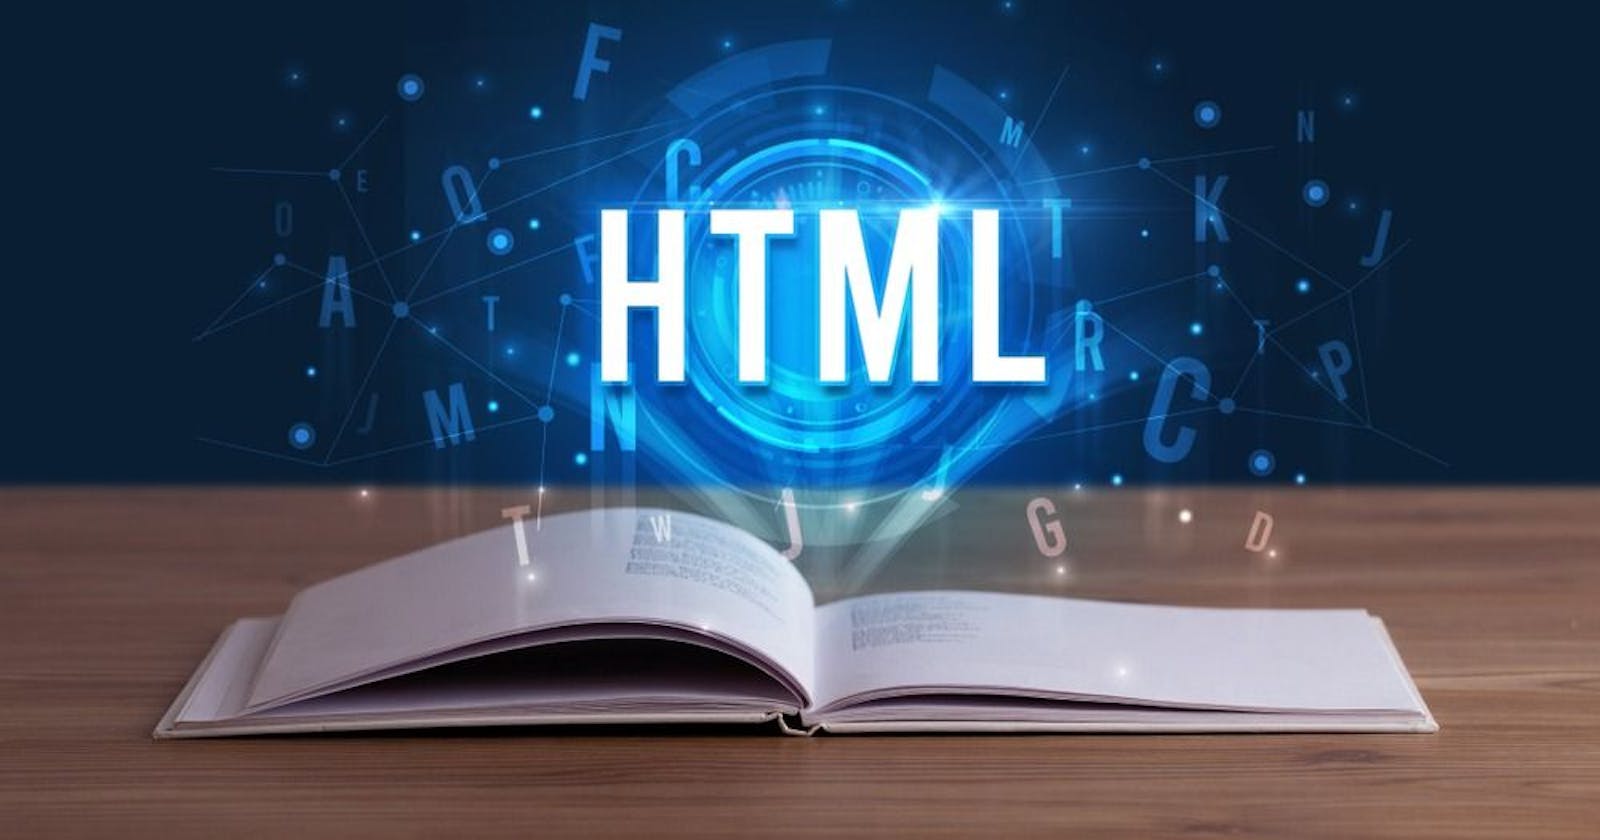 HTML Essentials: Building the Foundation of Web 
Development